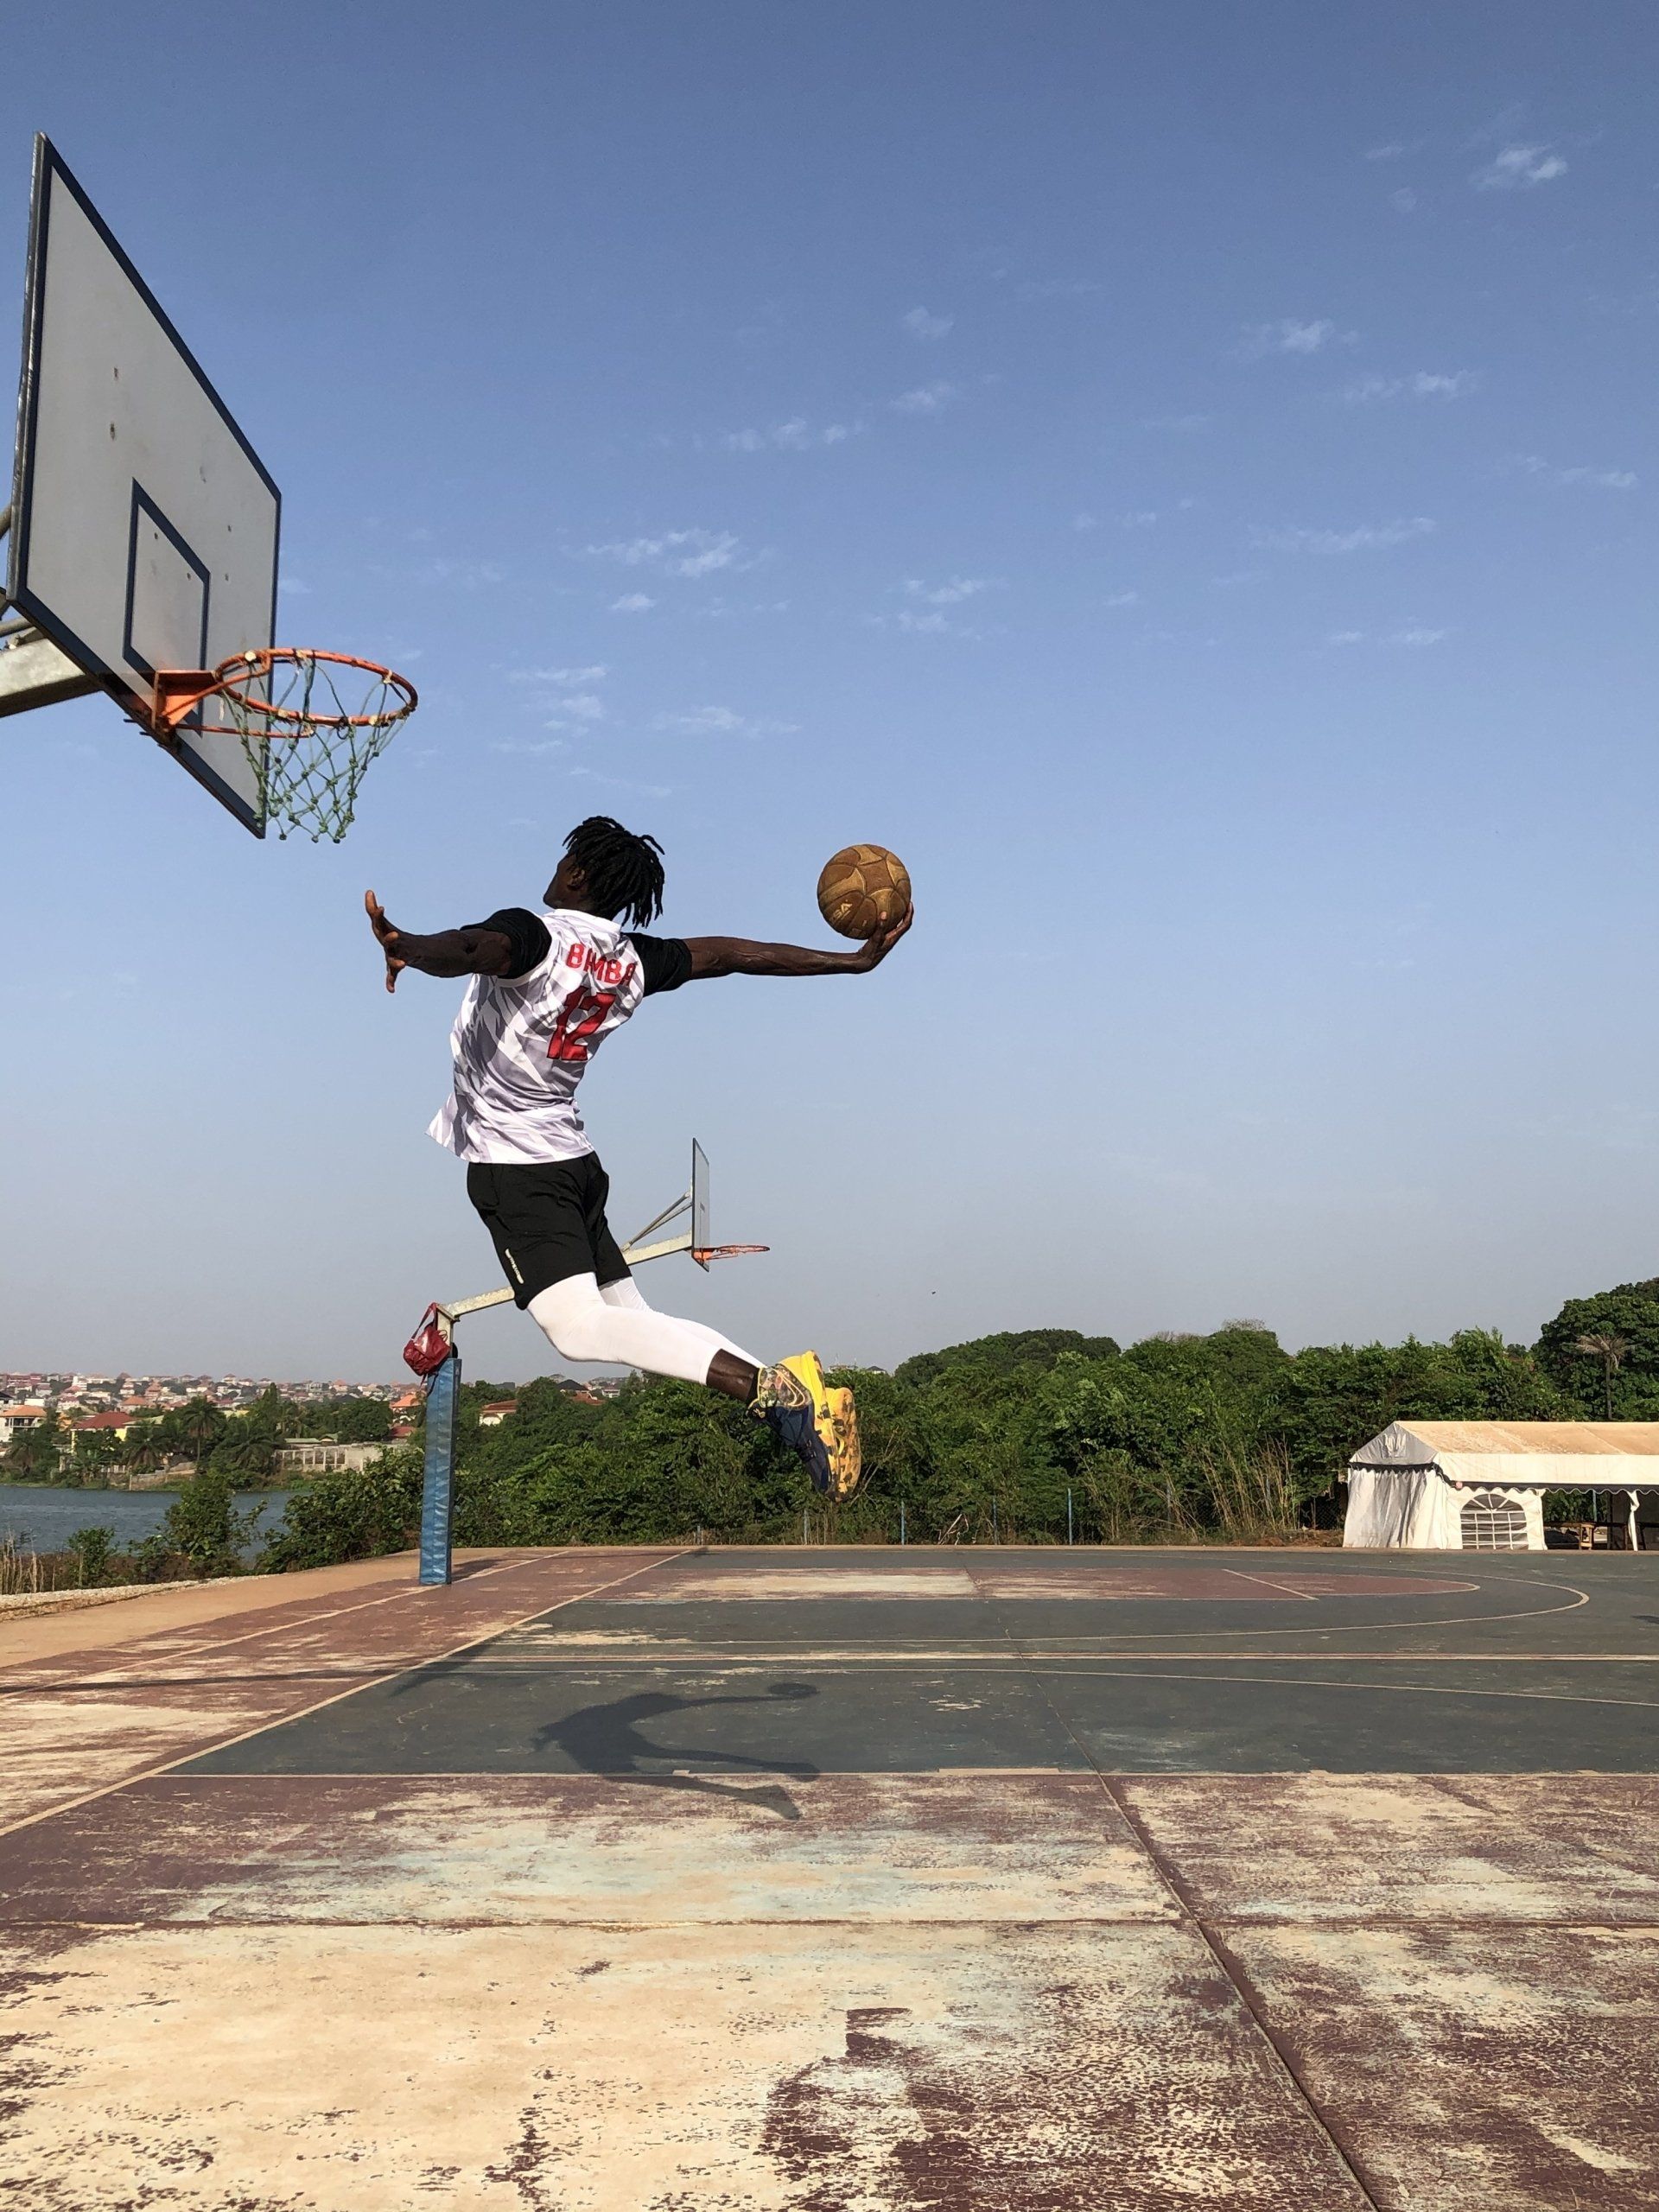 basketball player jumping high to make a hoop